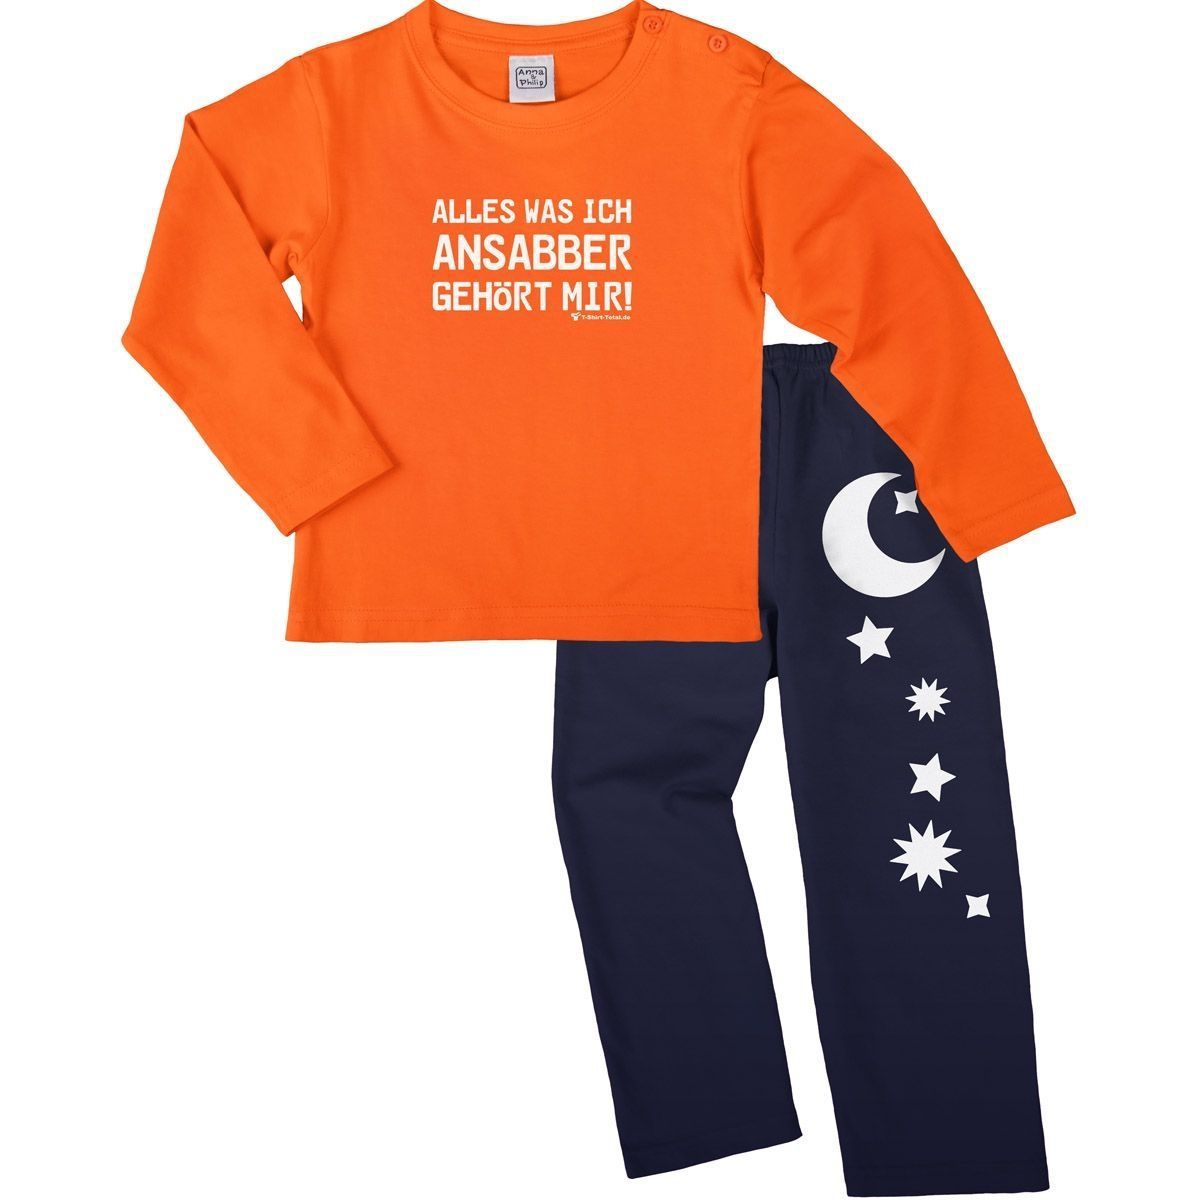 Ansabbern Pyjama Set orange / navy 92